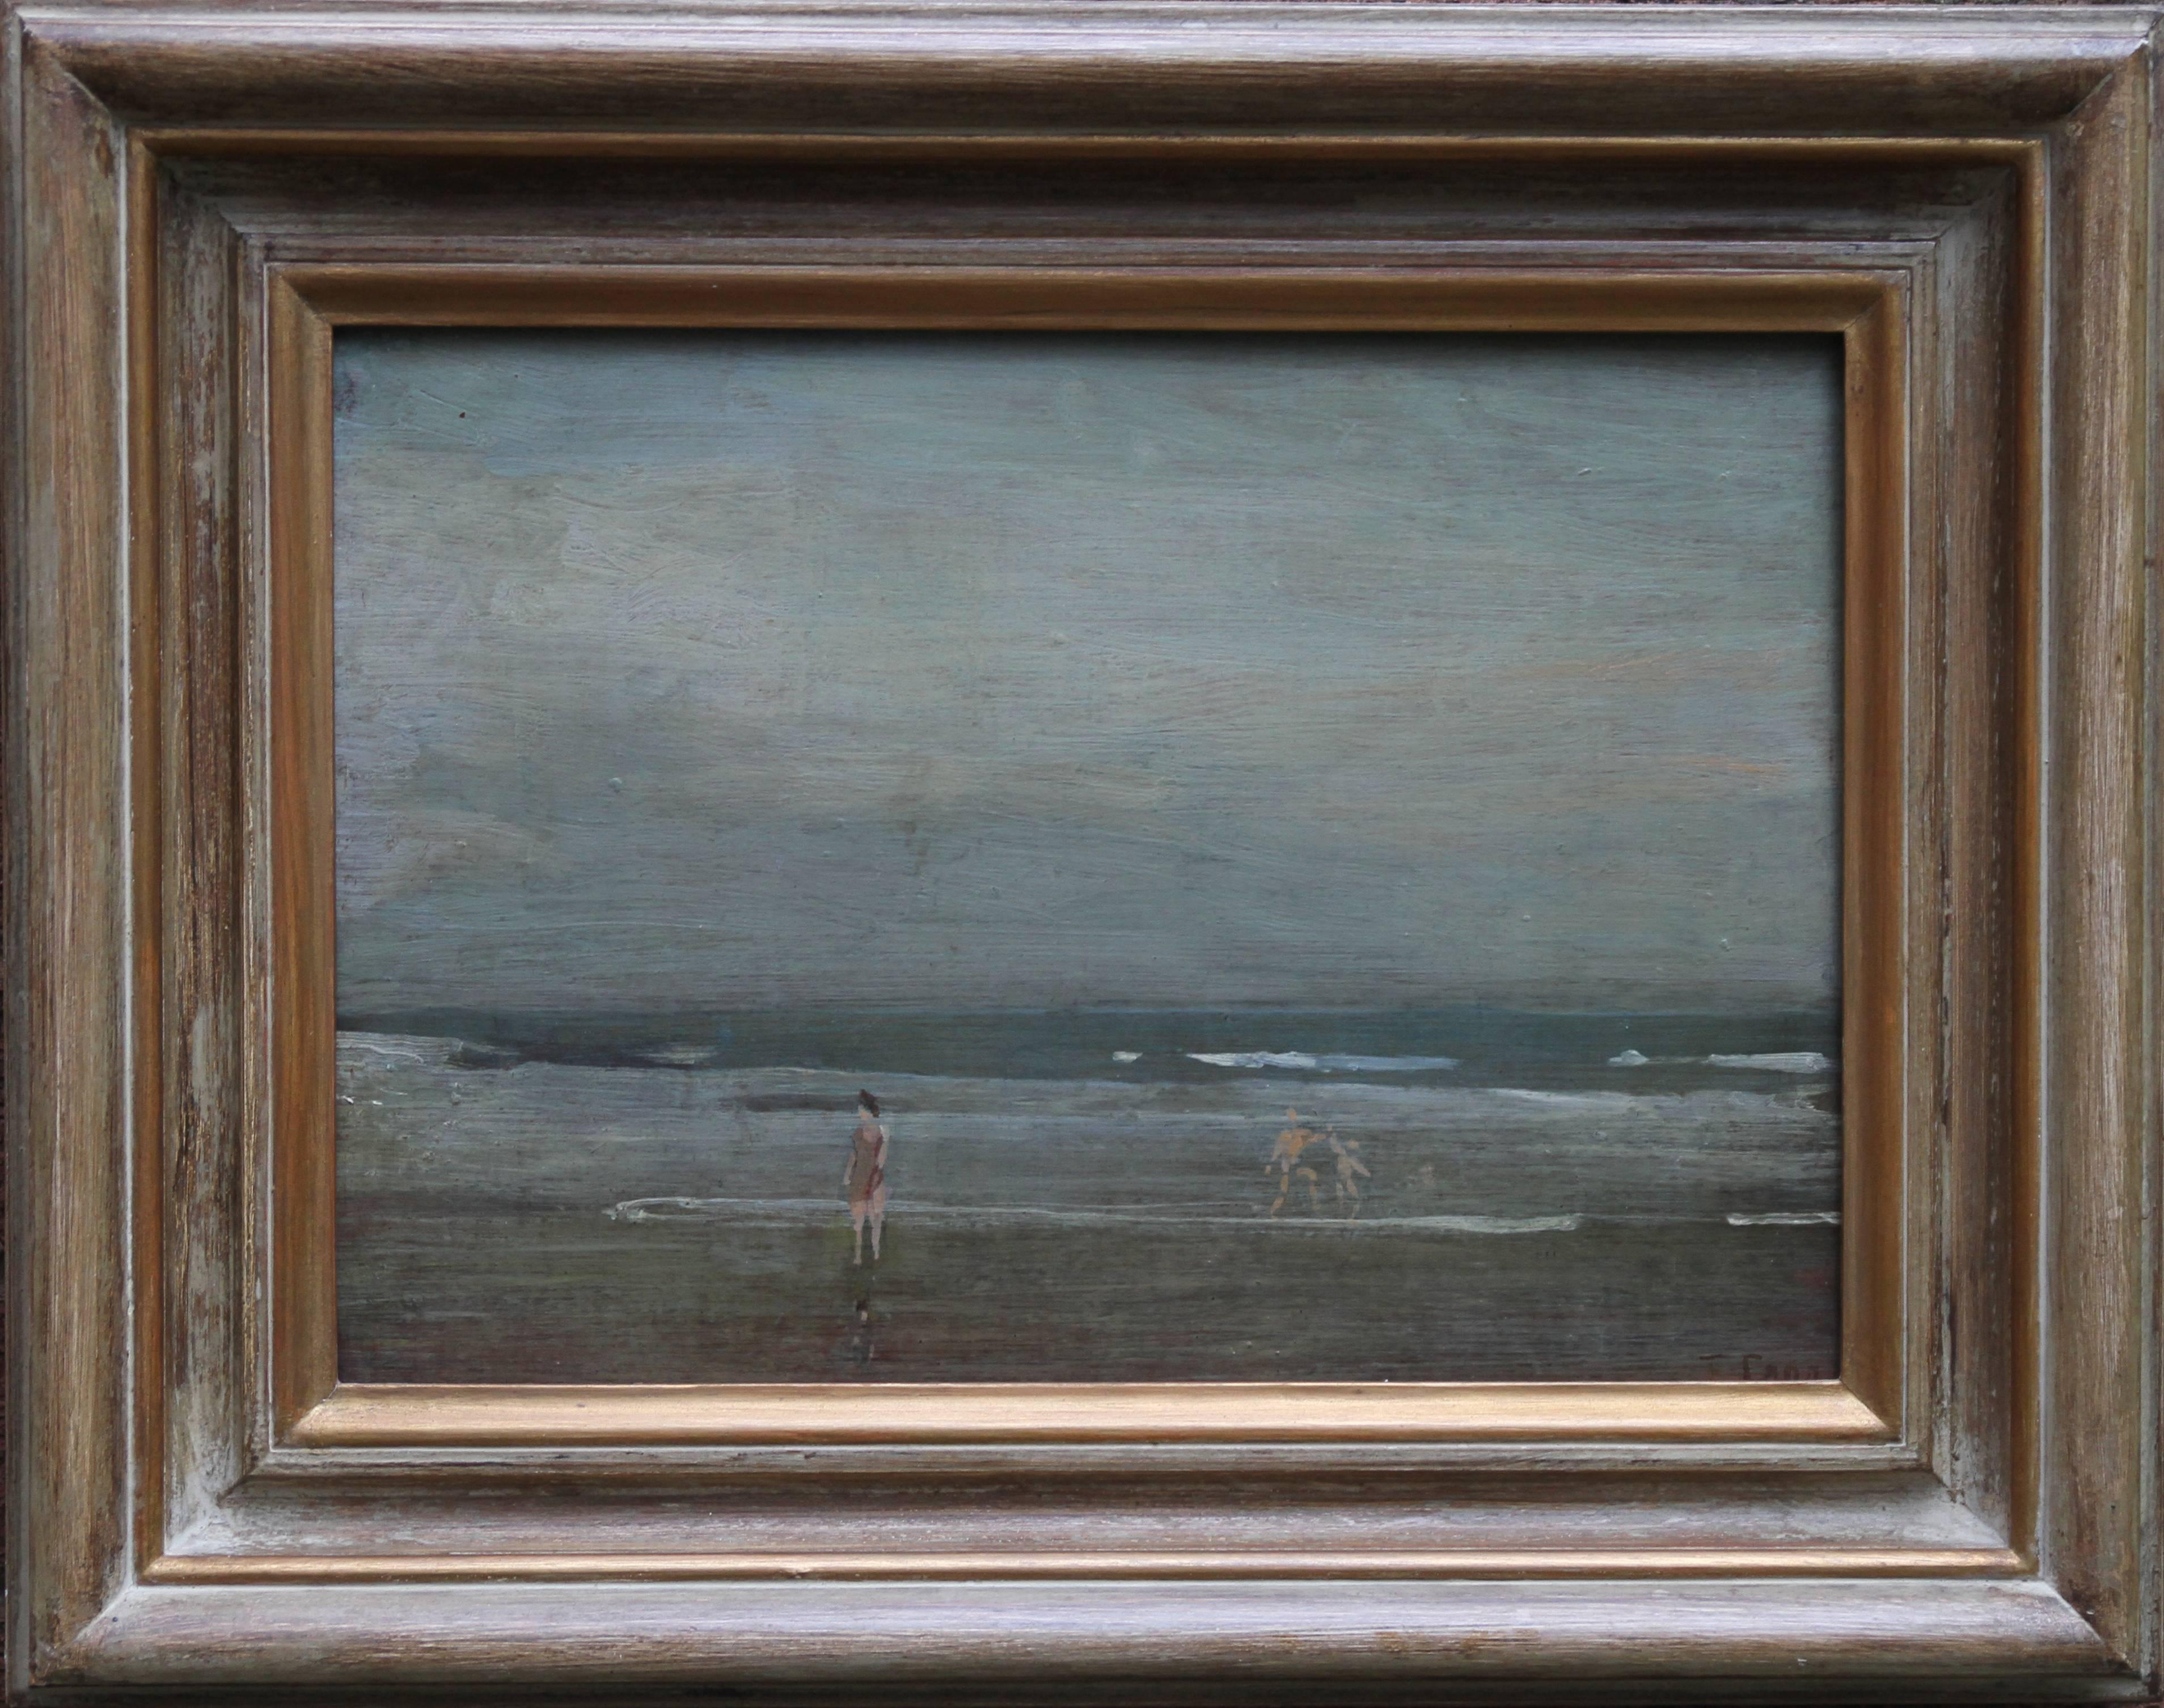 Thomas Carr Landscape Painting - Bathers on Seashore - Irish art 40's Impressionist oil painting marine seascape